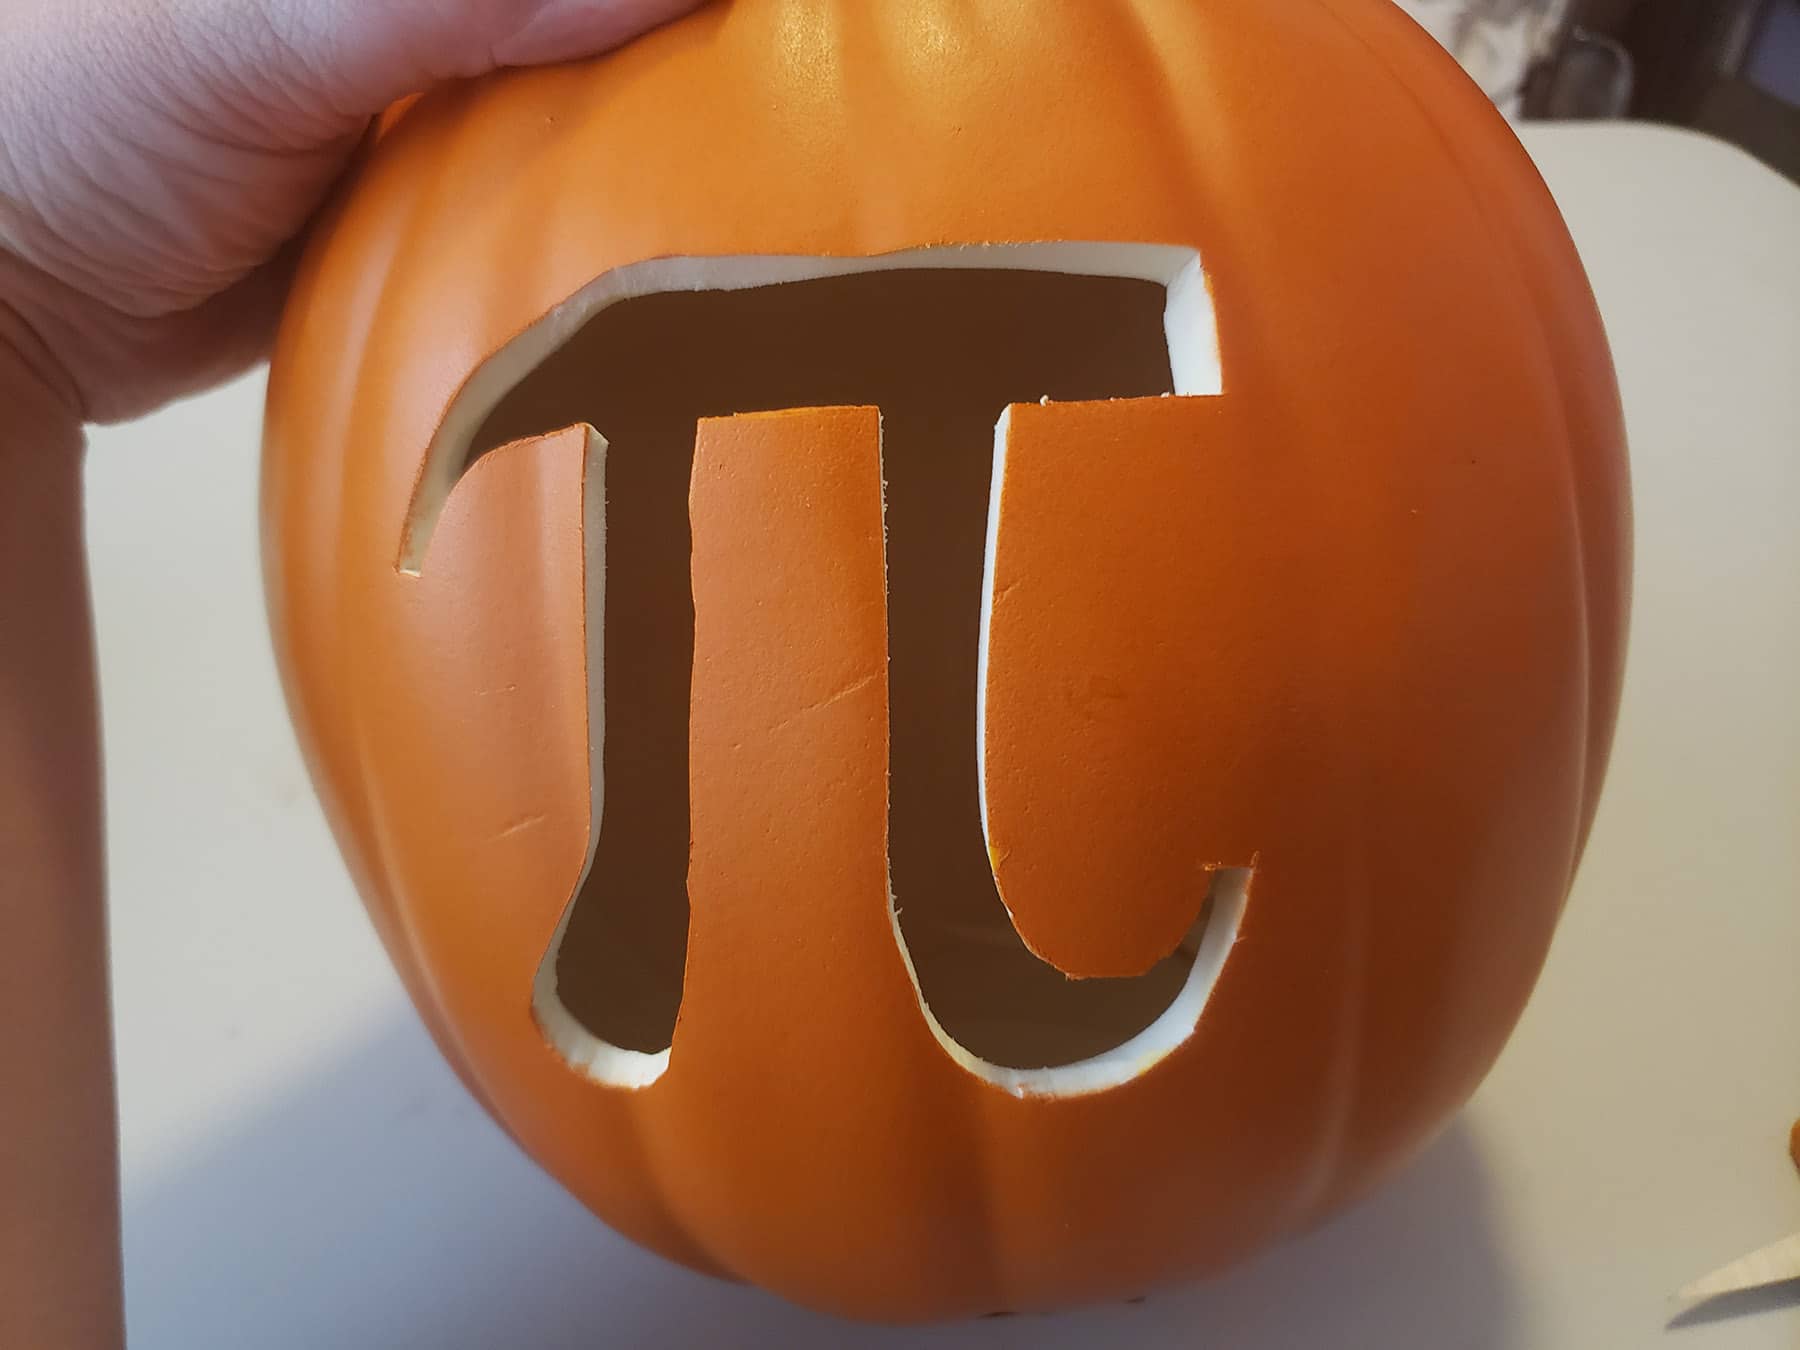 The pi symbol is cut out of a foam pumpkin.